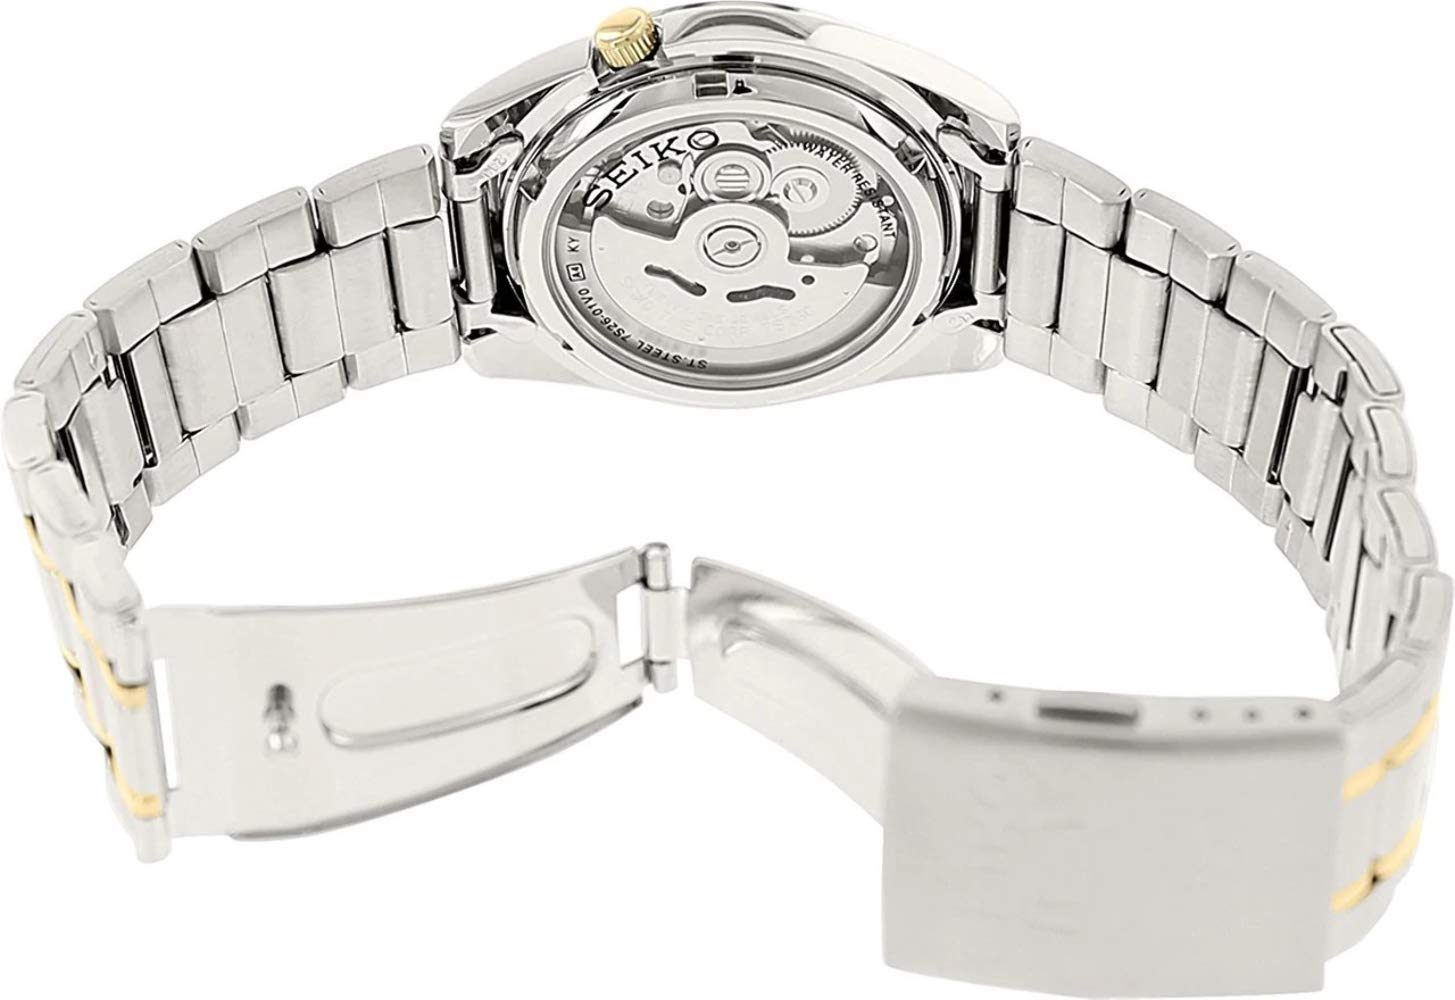 Seiko 5 Silver/Gold Watch SNKL47K1